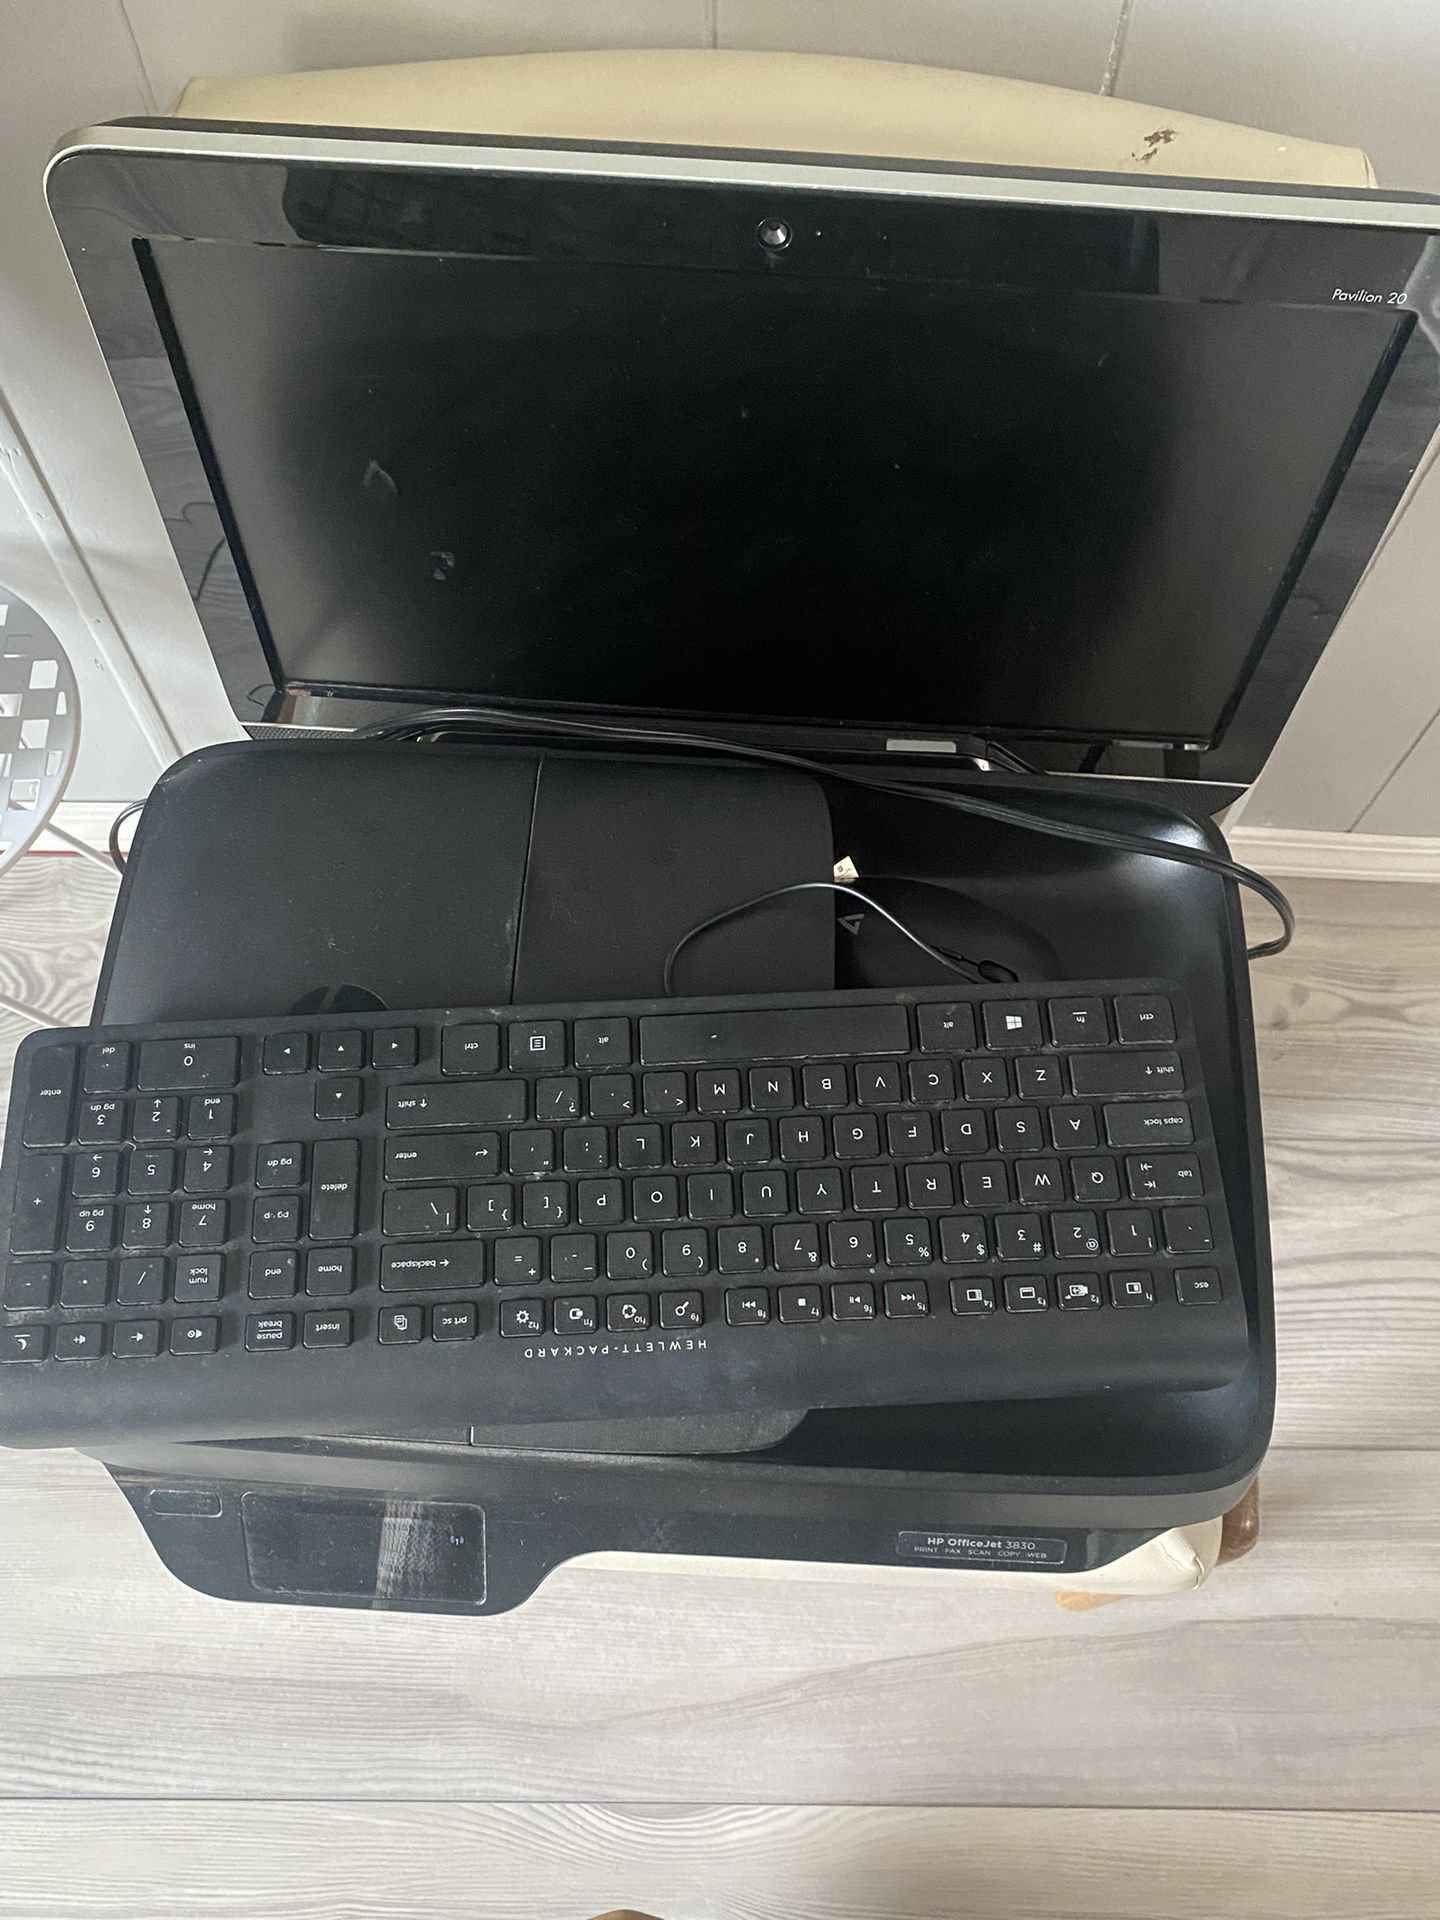  Computer And Keyboard 